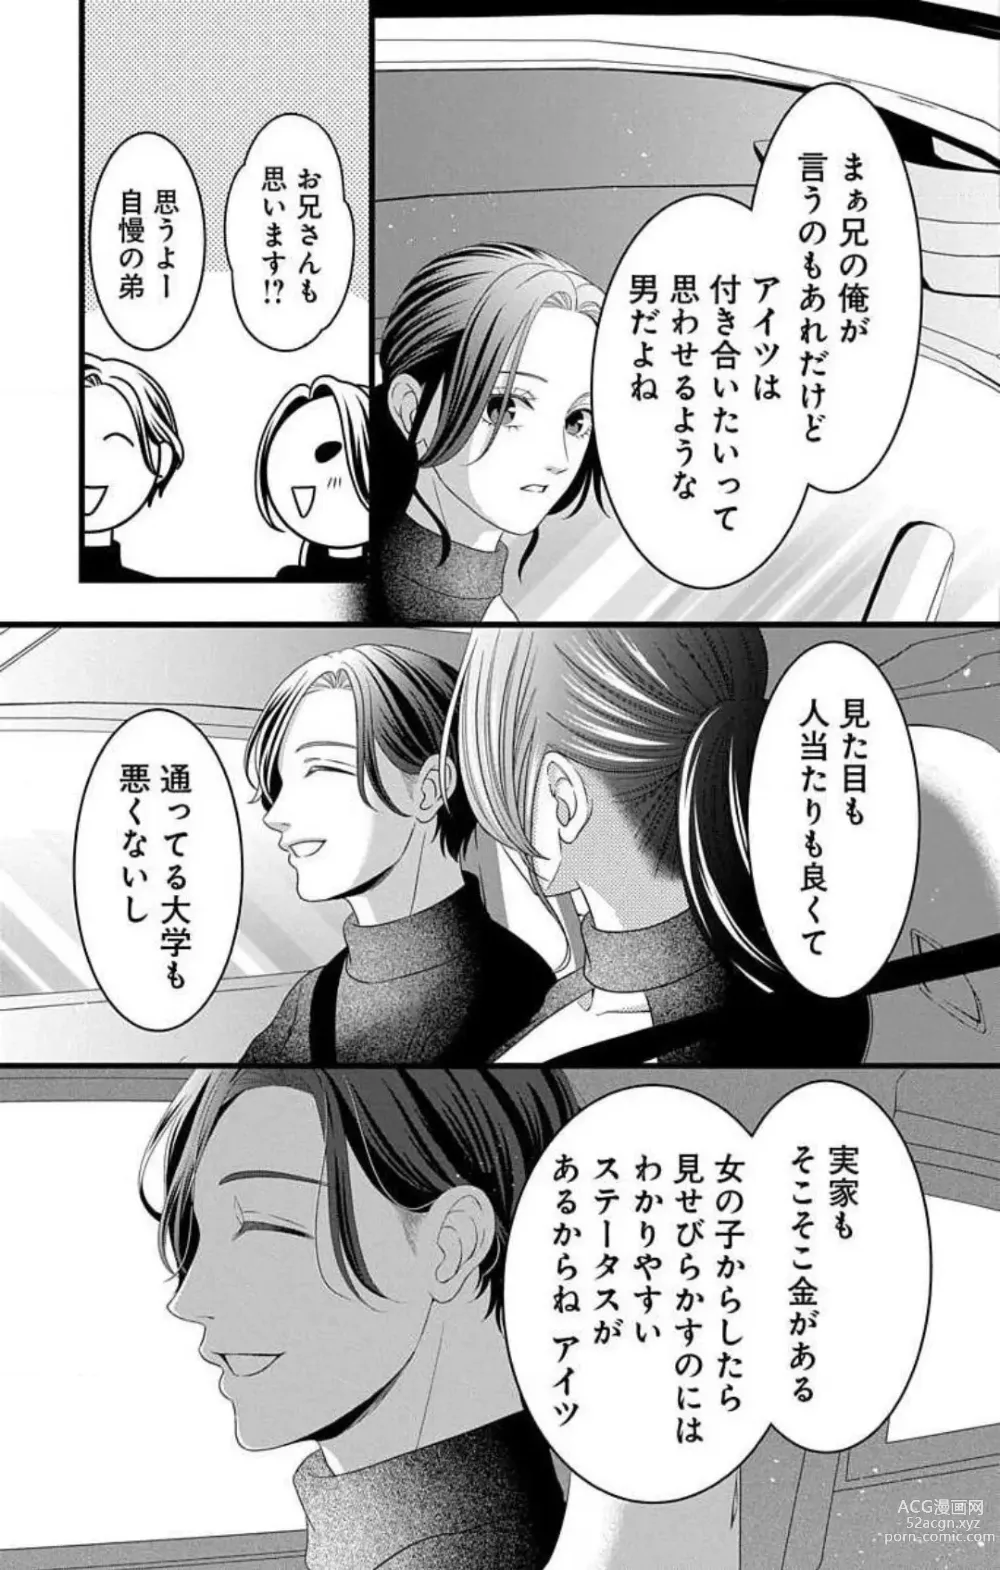 Page 268 of manga Mousou Shoujo 21-27